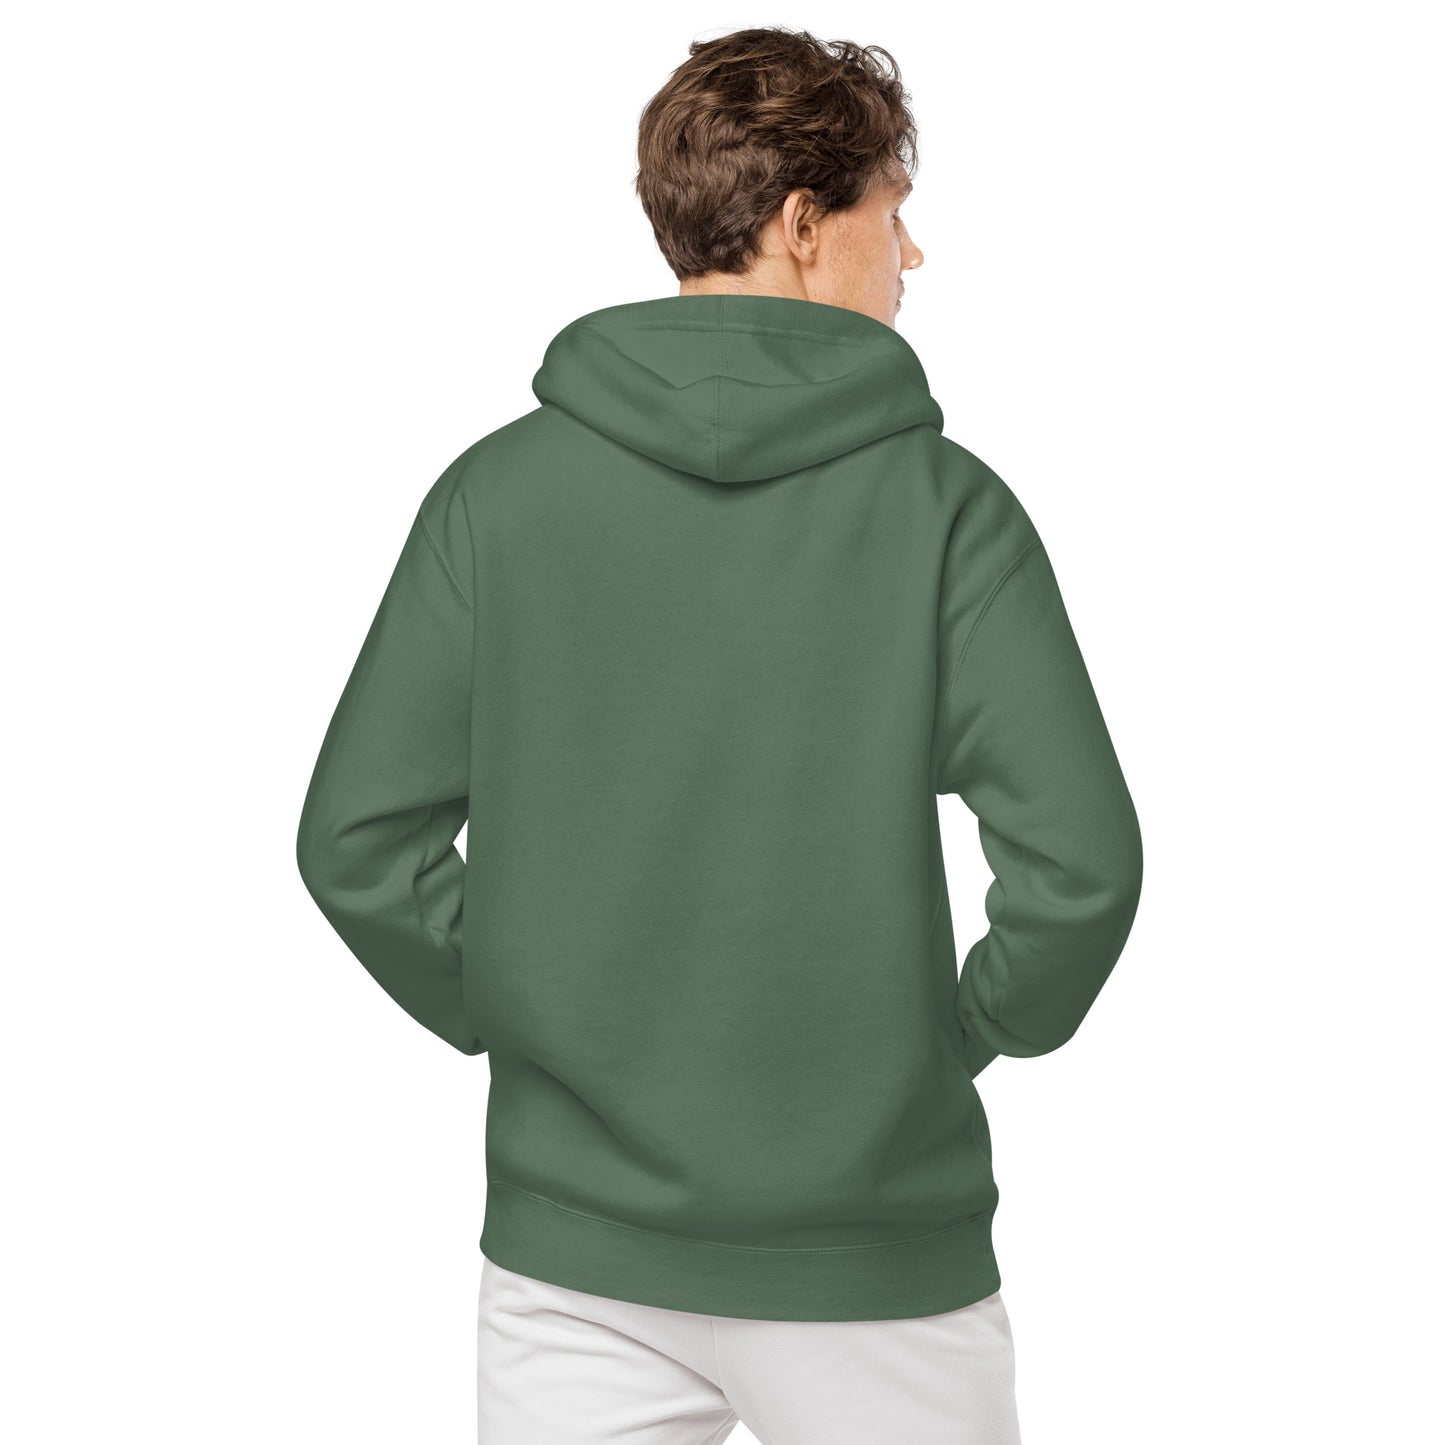 Sqdltd Football Rose Unisex pigment-dyed hoodie